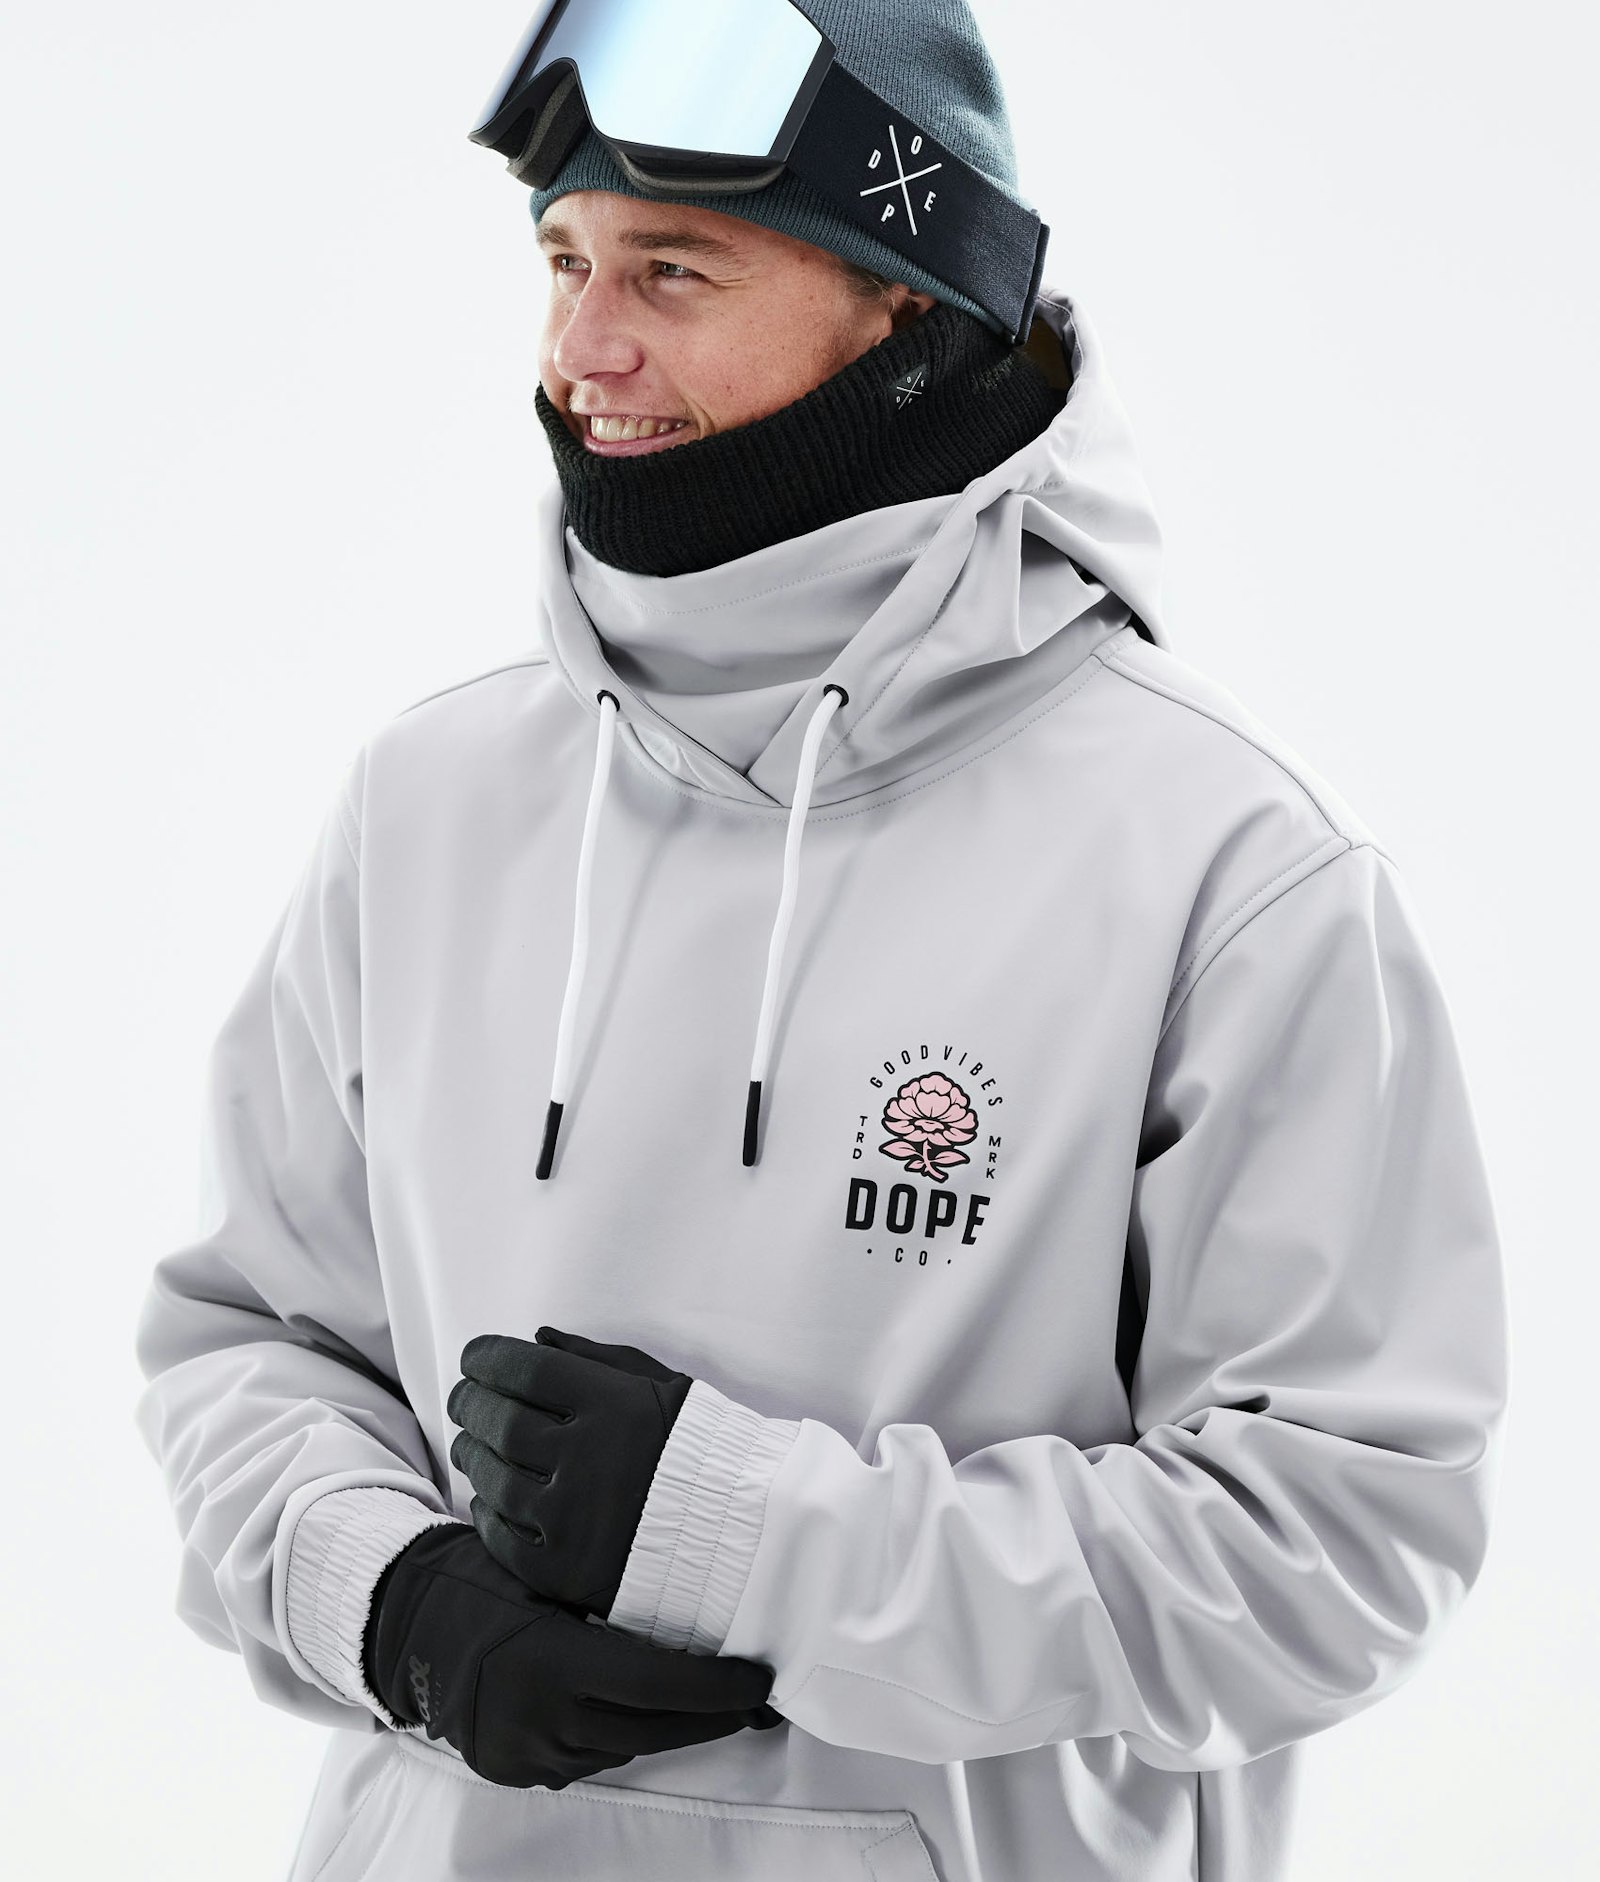 Yeti 2021 Veste Snowboard Homme Rose Light Grey